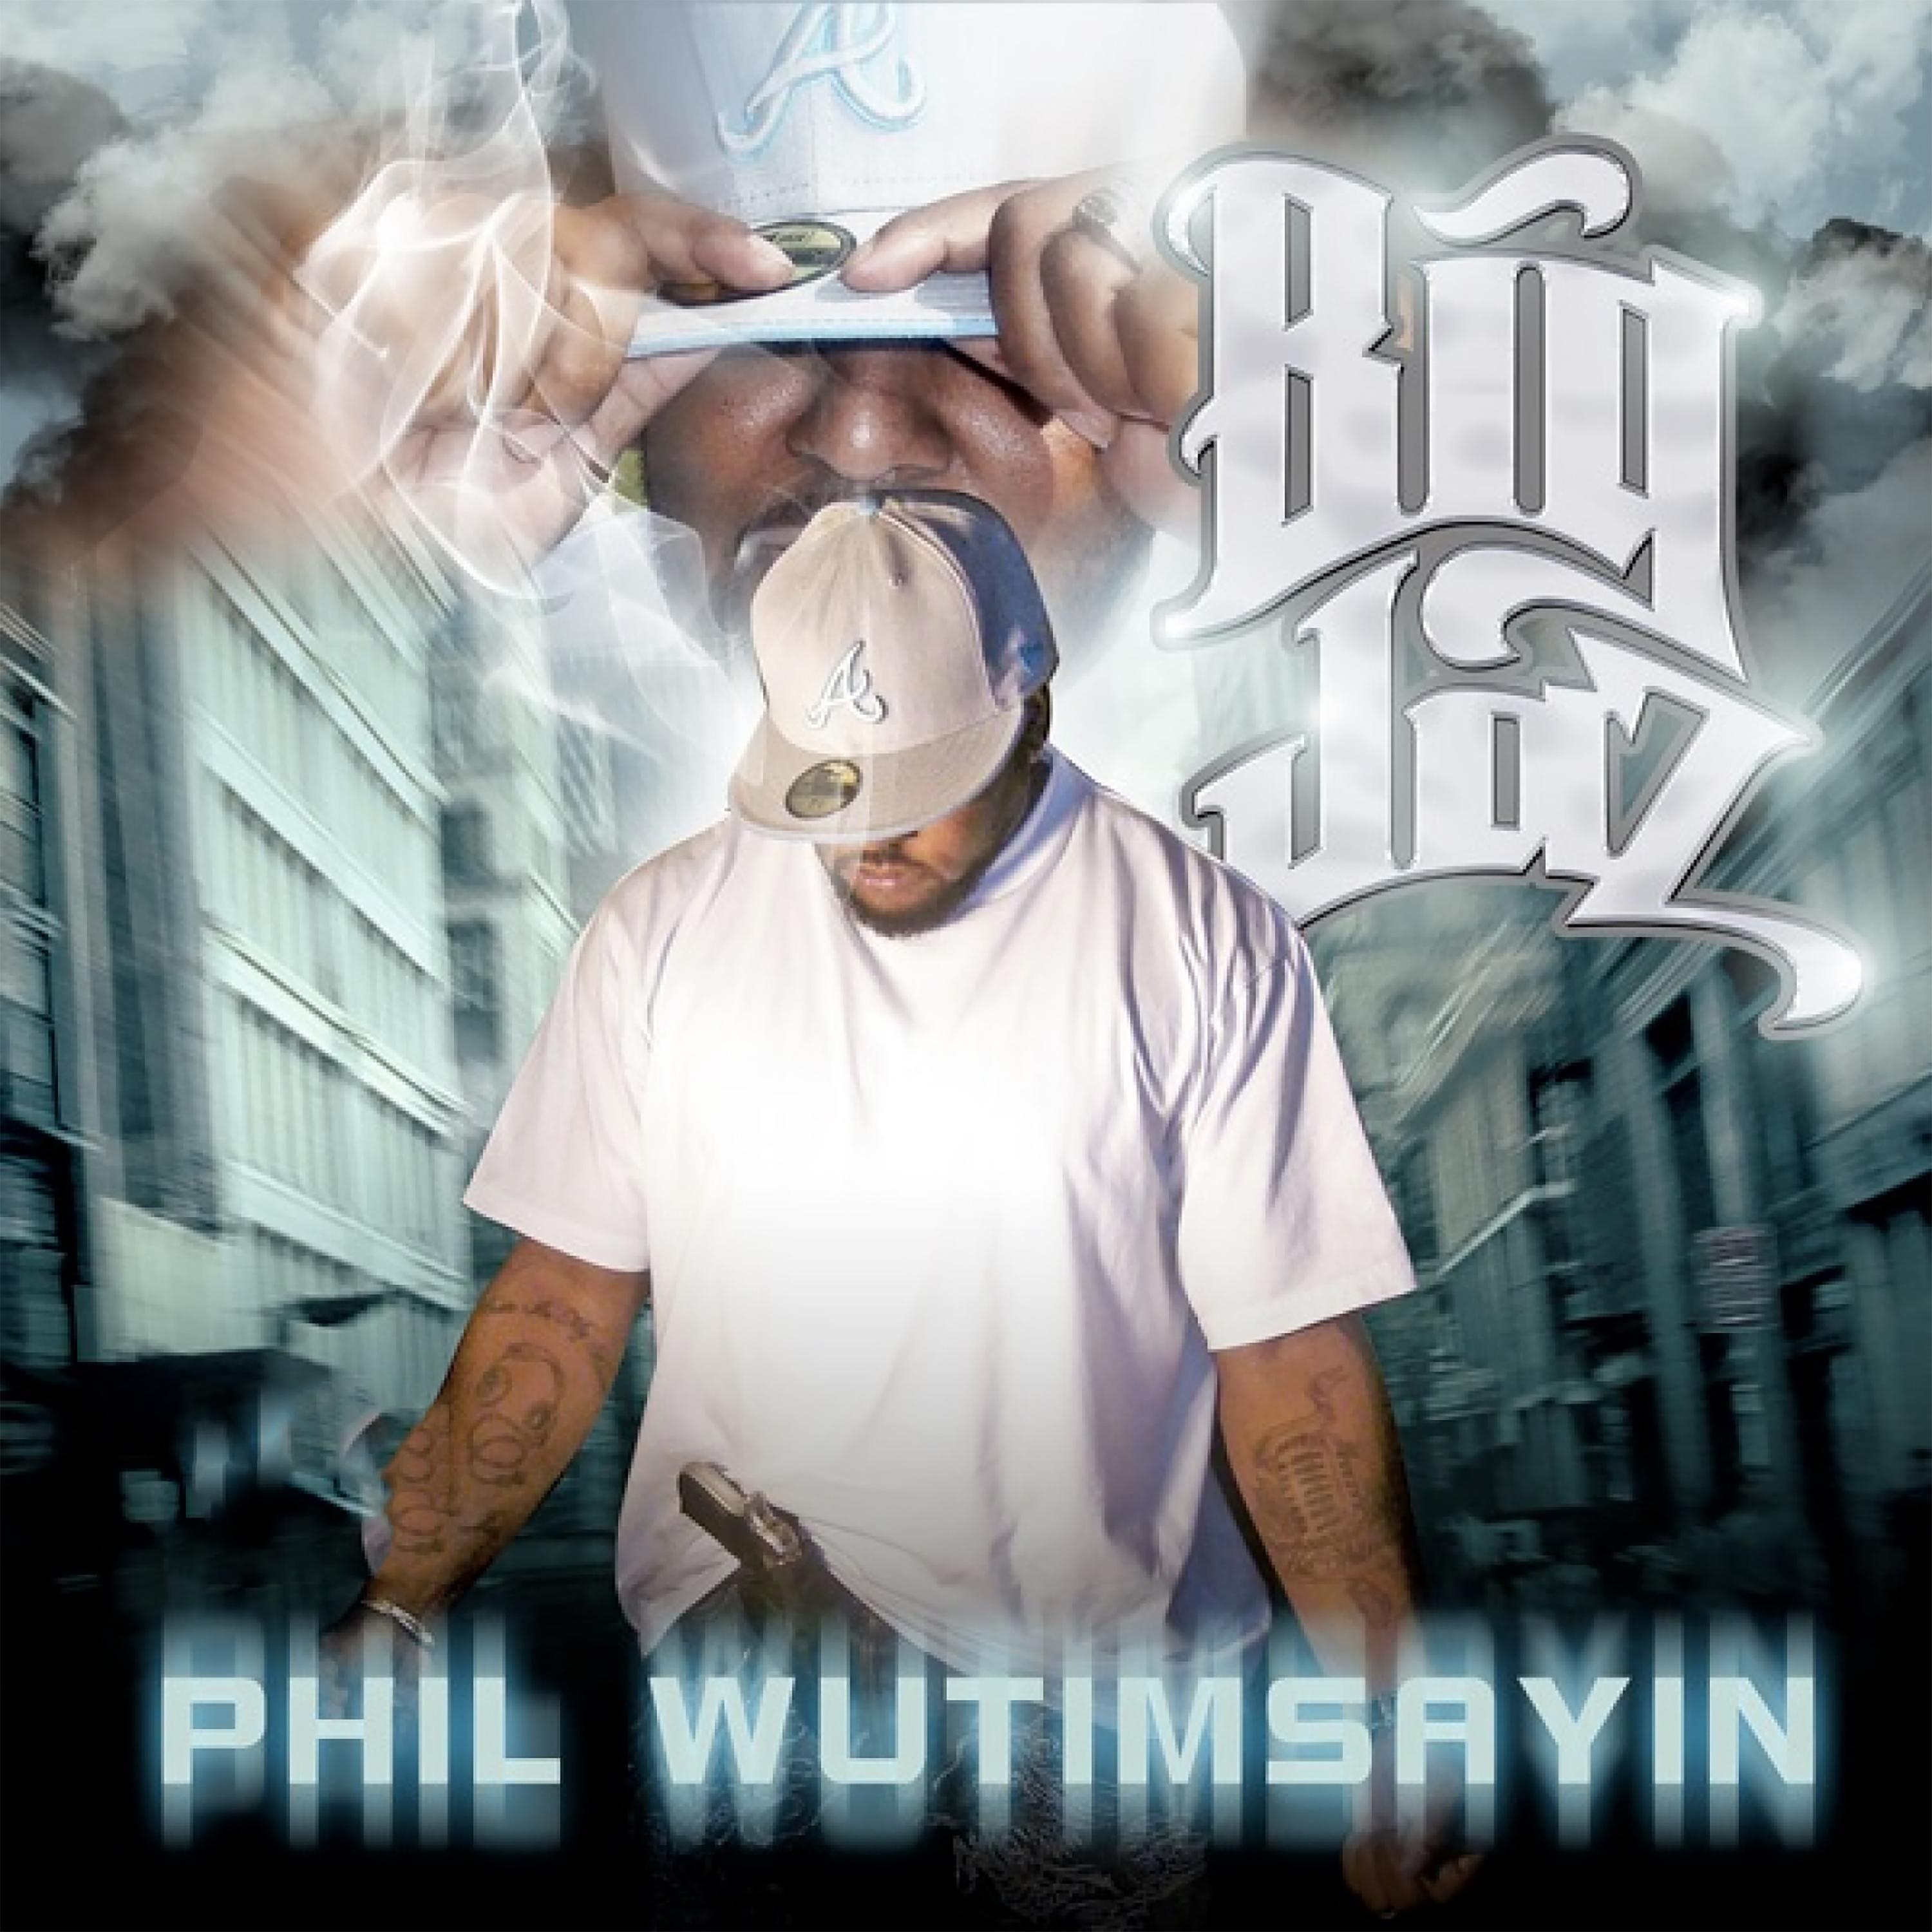 Phil Wutimsayin